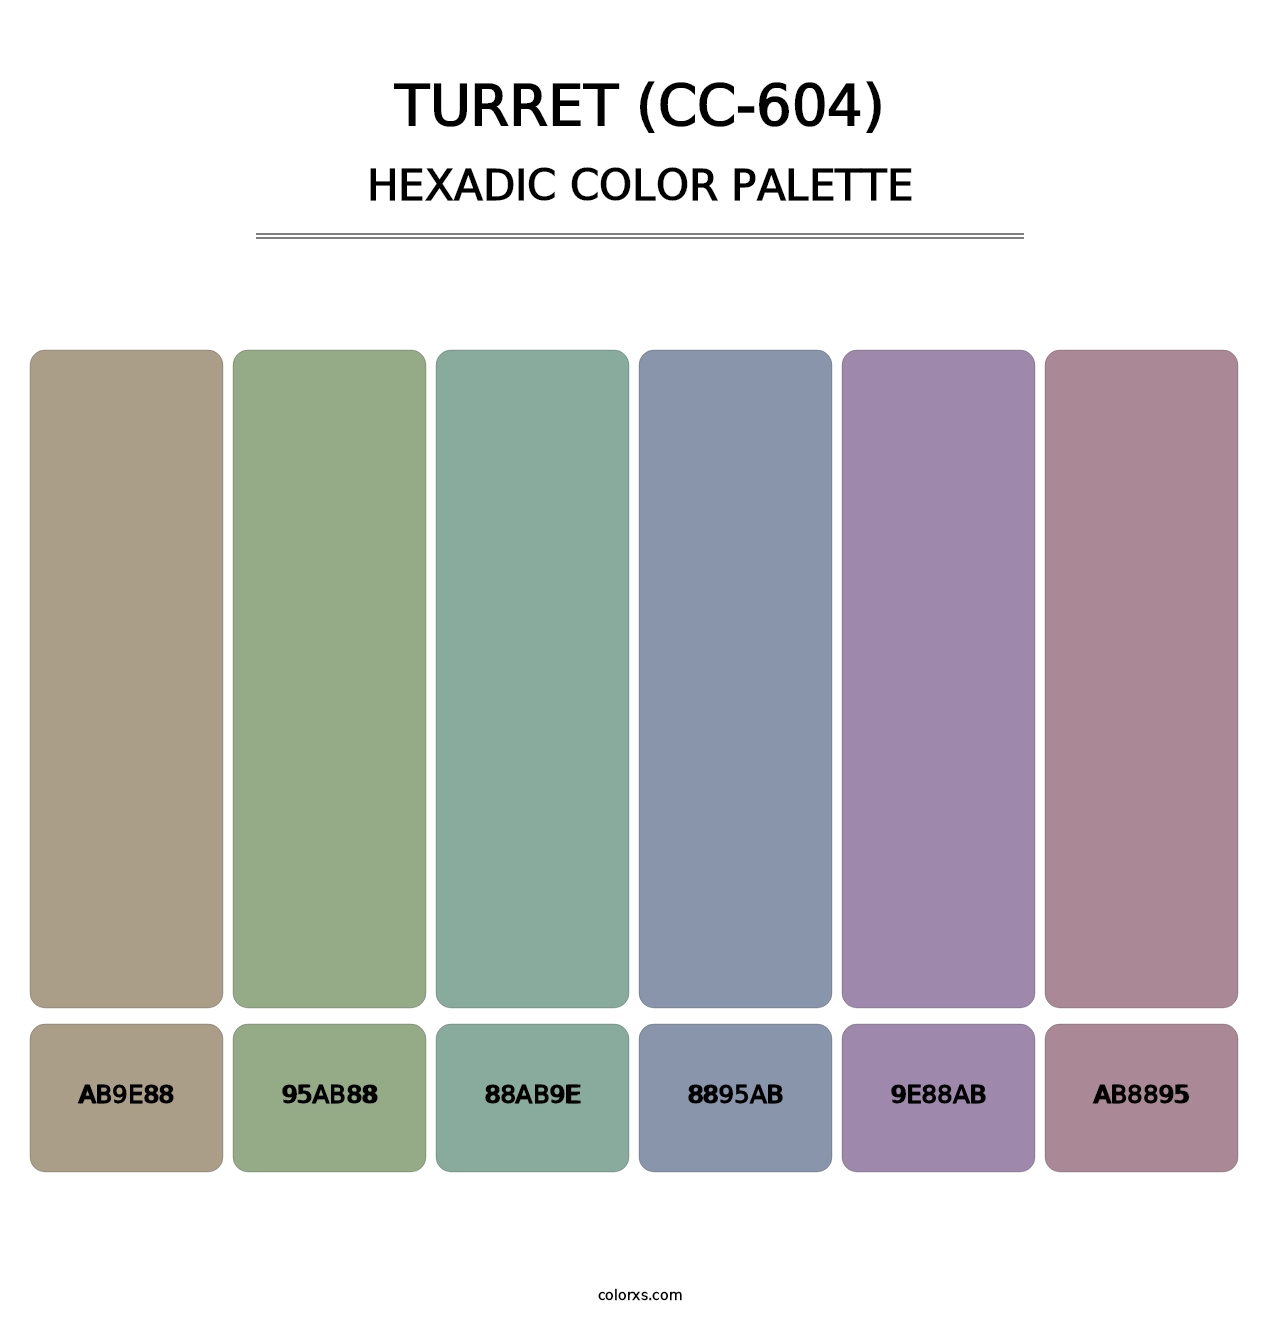 Turret (CC-604) - Hexadic Color Palette